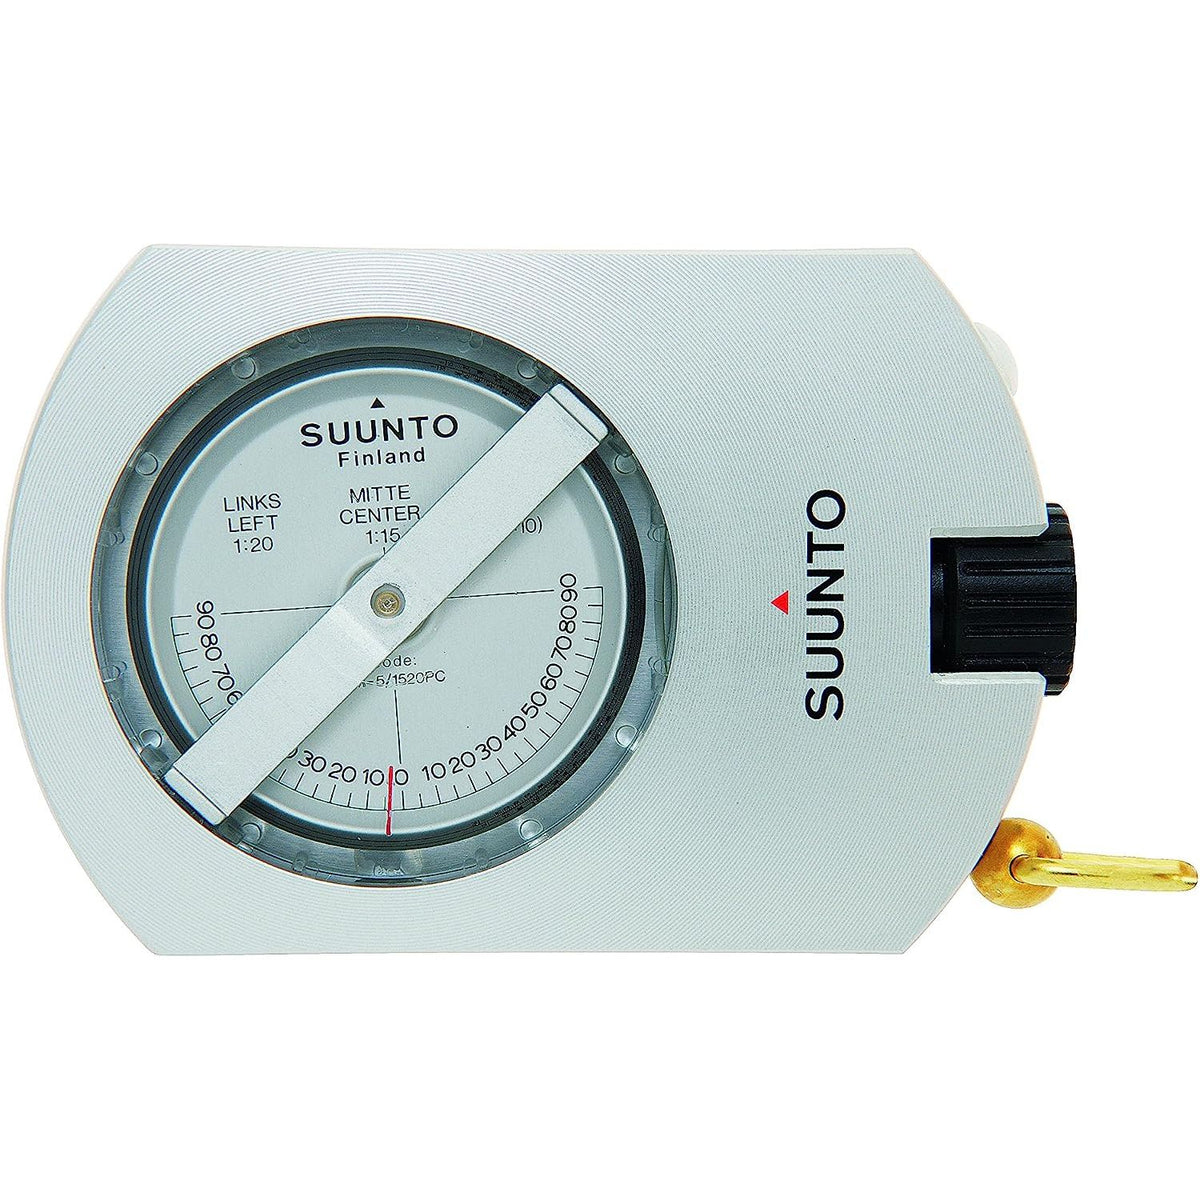 Suunto PM-5/1520 PC Opti Height Meter/Clinometer Combined